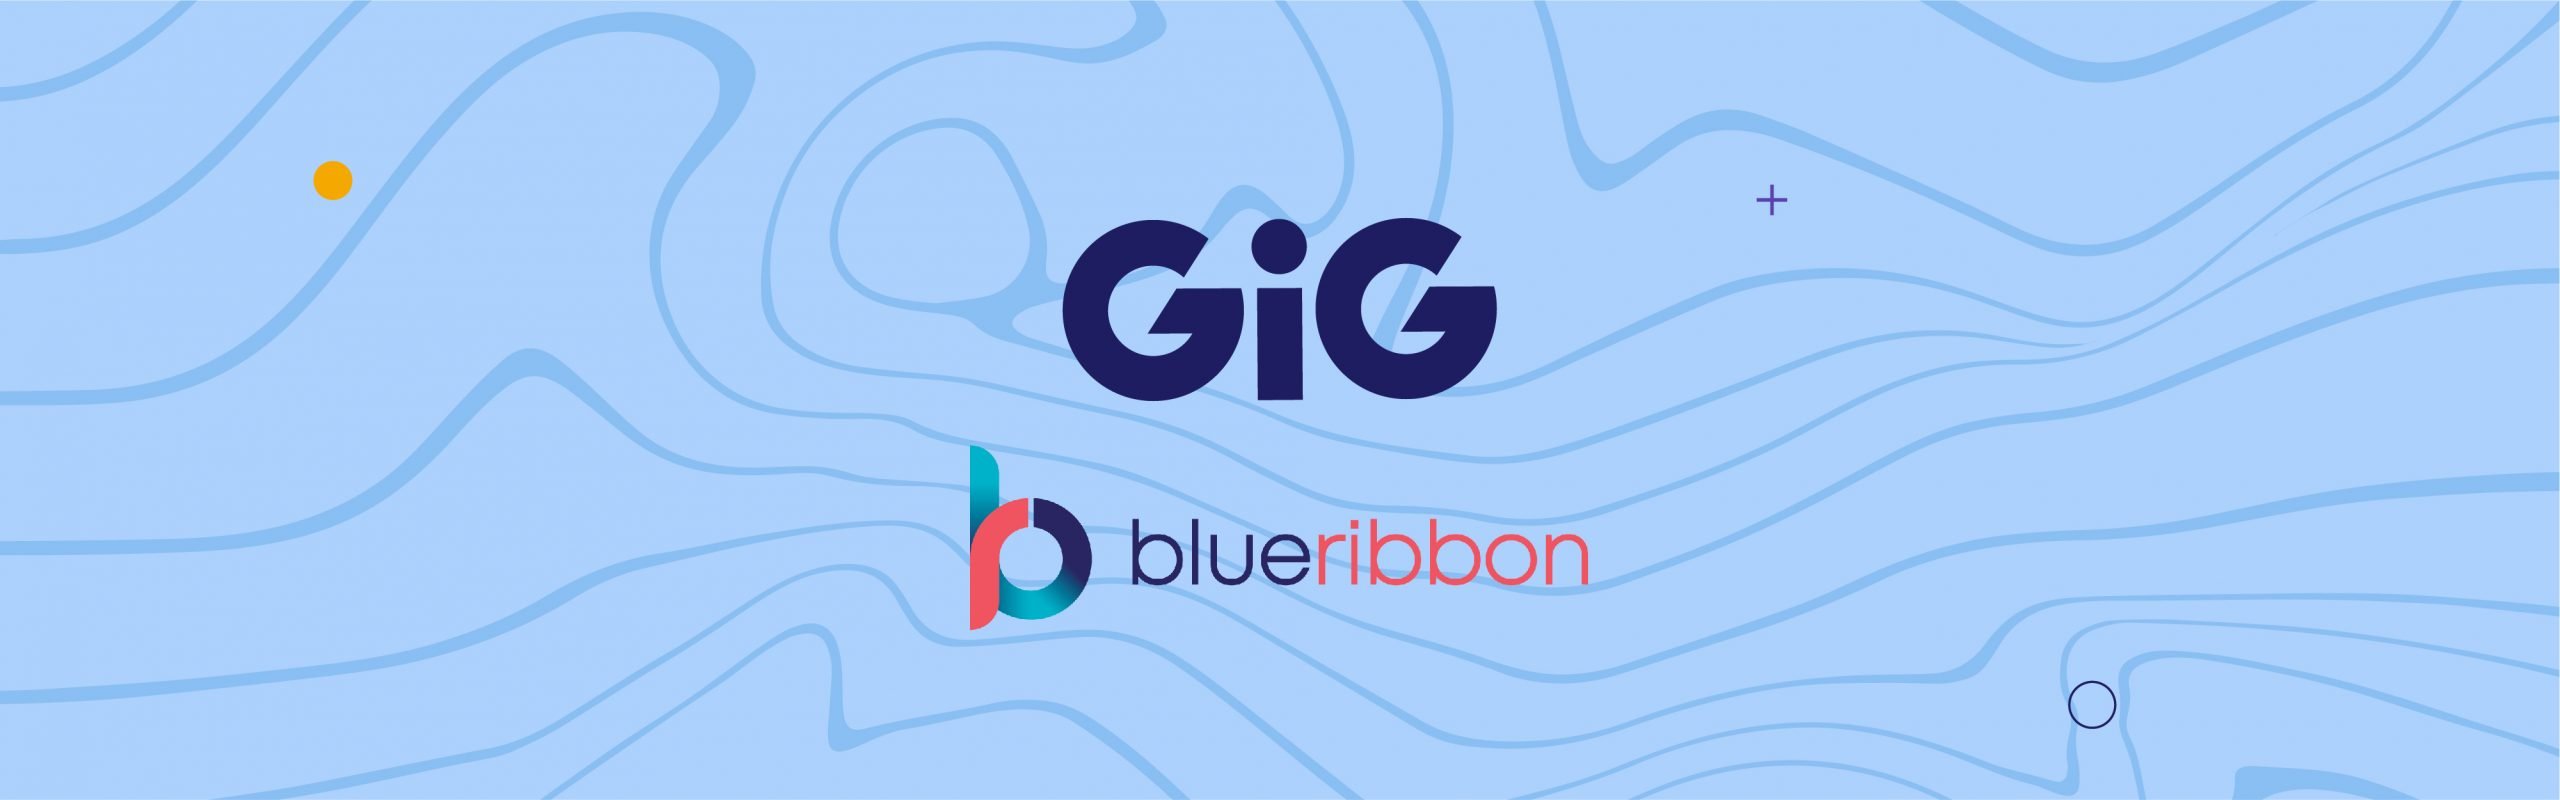 BlueRibbon GiG